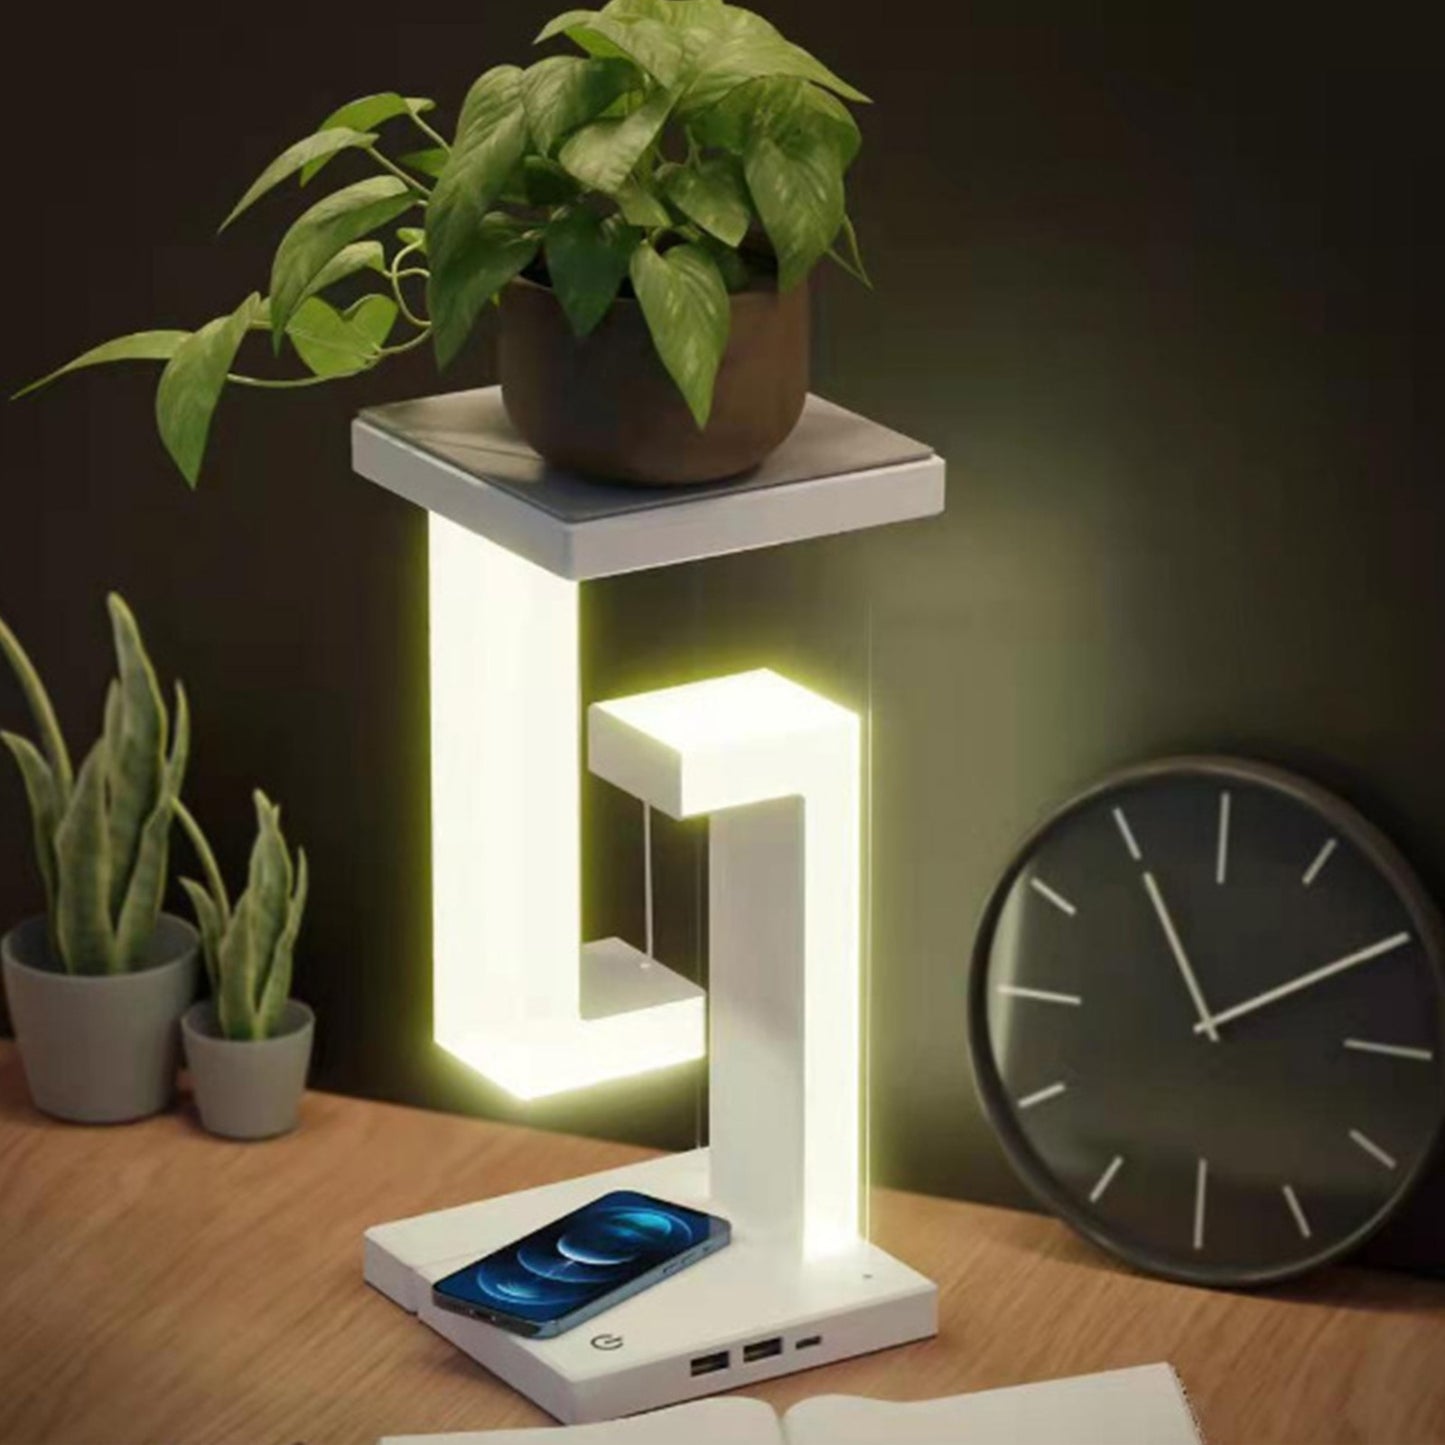 Anti-Gravity Desk Lamp LED Lamp Smartphone Wireless Charging Suspension Table Lamp USB Bedroom Sleep Light Reading Light